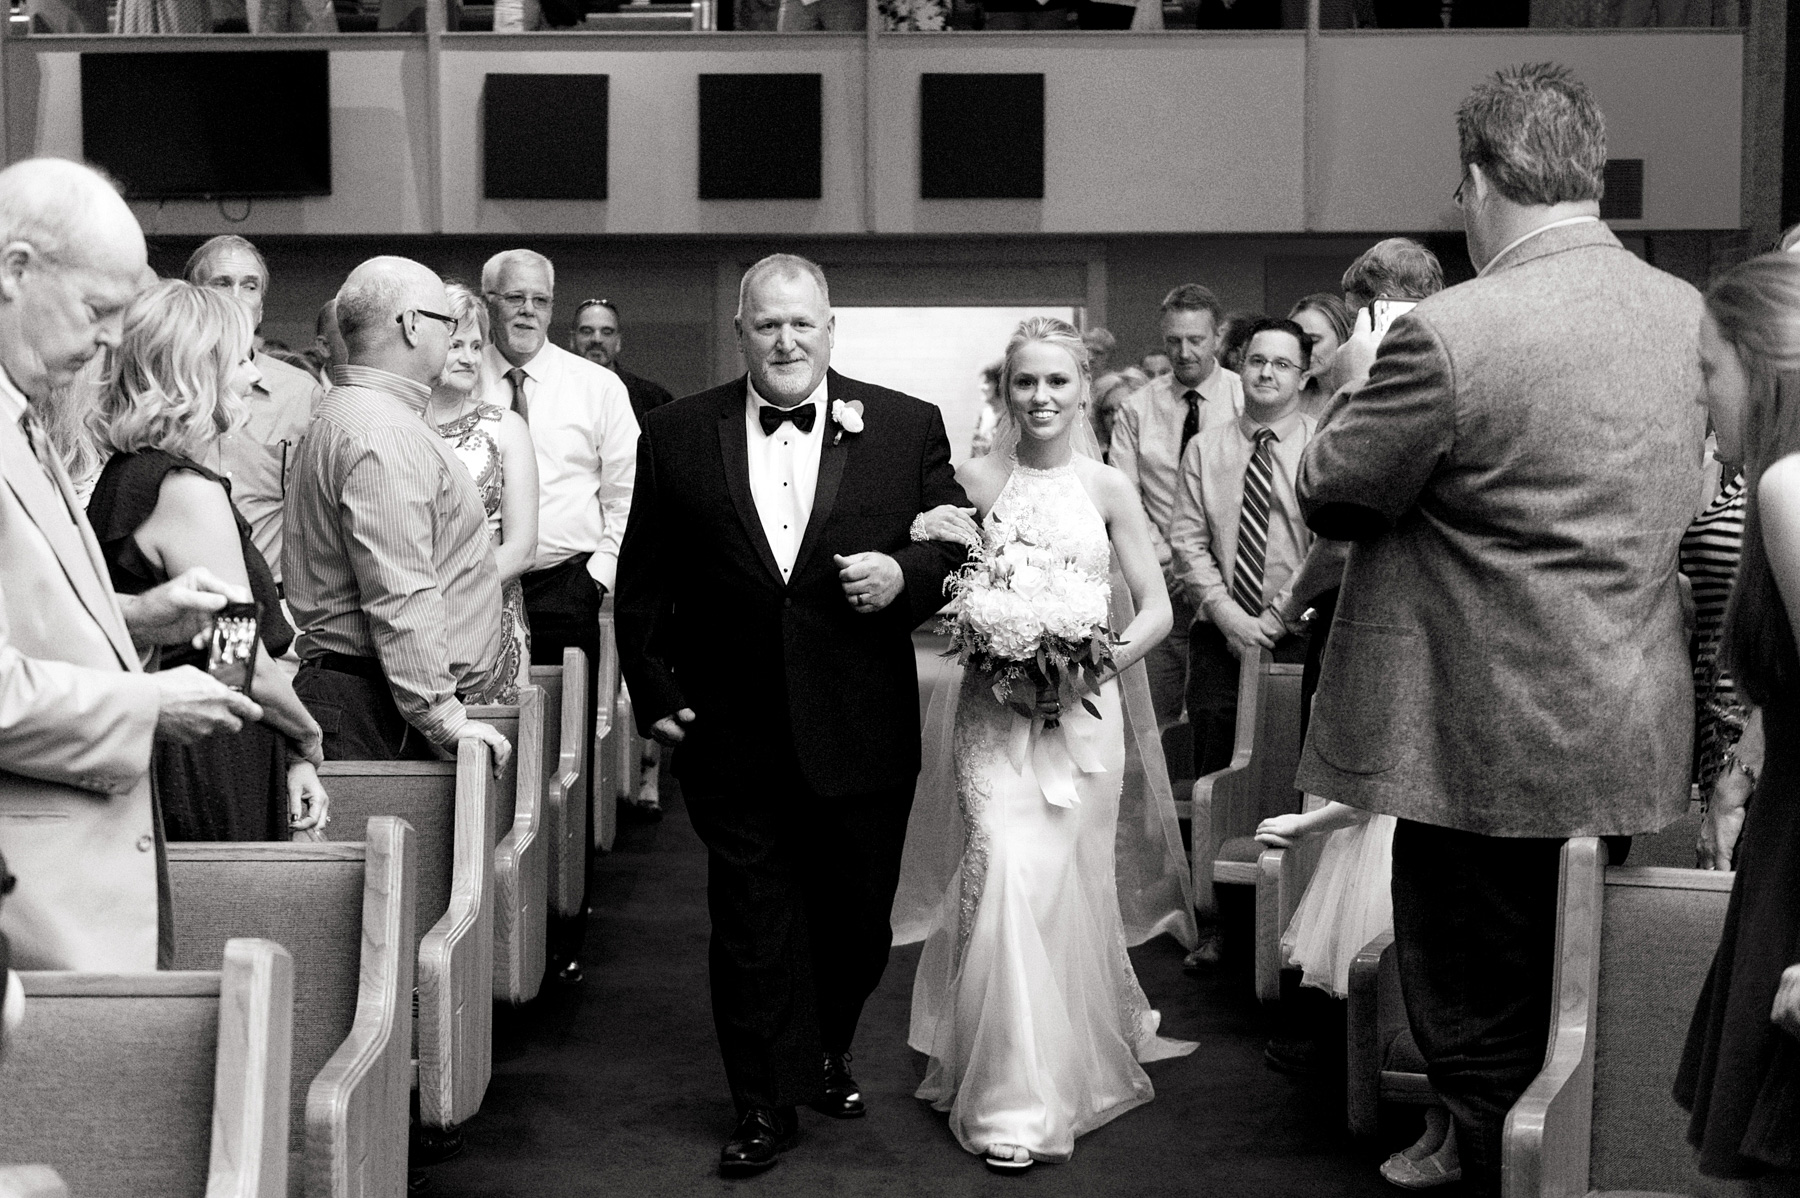 photo of wedding ceremony by ashley fisher photography